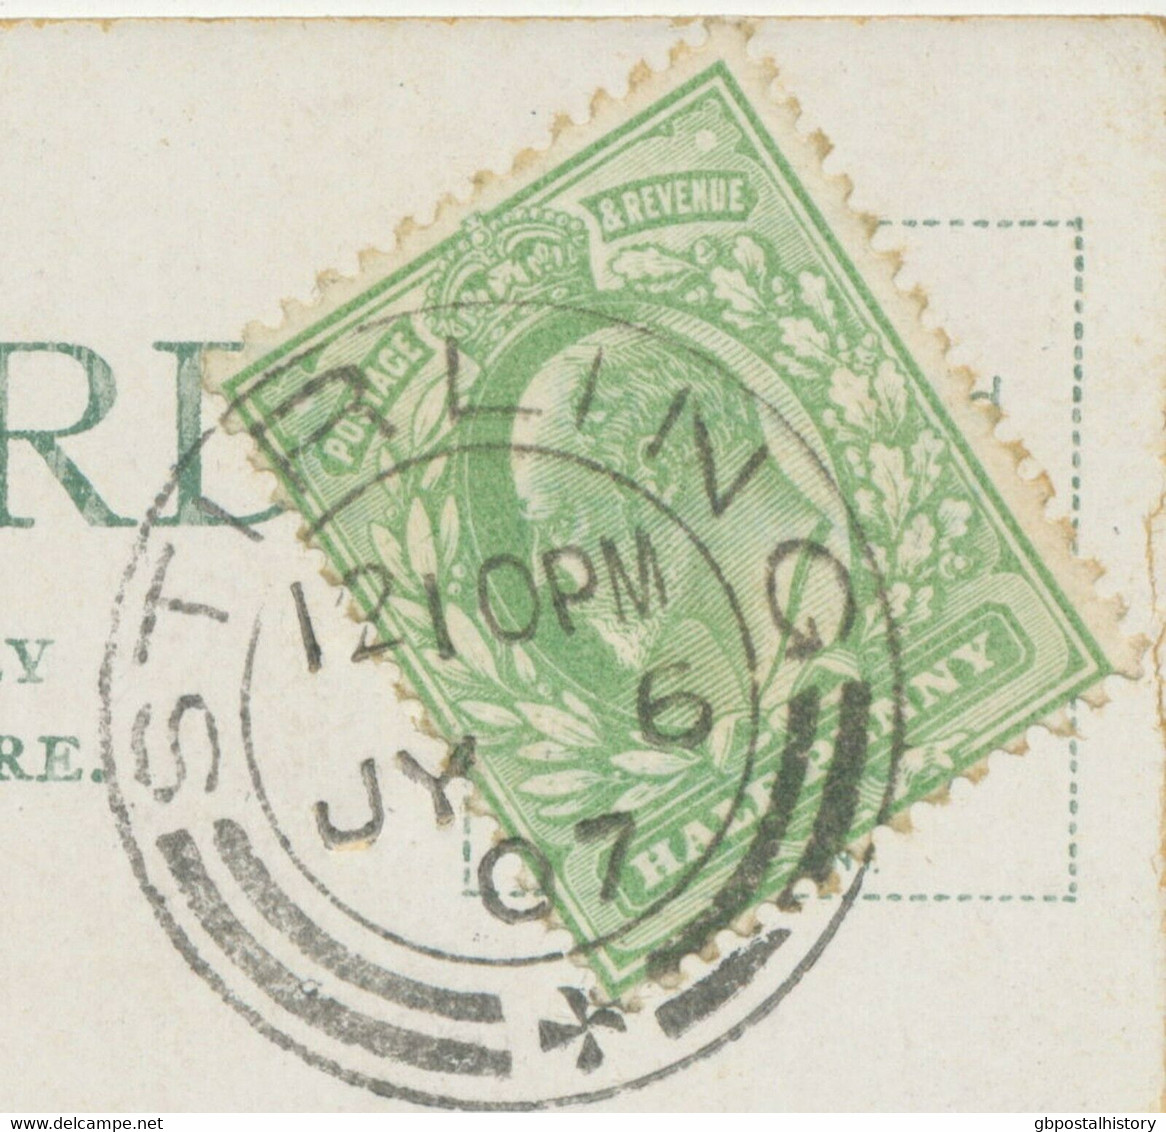 GB SCOTTISH VILLAGE POSTMARKS „STIRLING“ Superb Strike (24mm, UNCOMMON Time Code „1210PM“) On Very Fine Postcard 1907 - Scotland